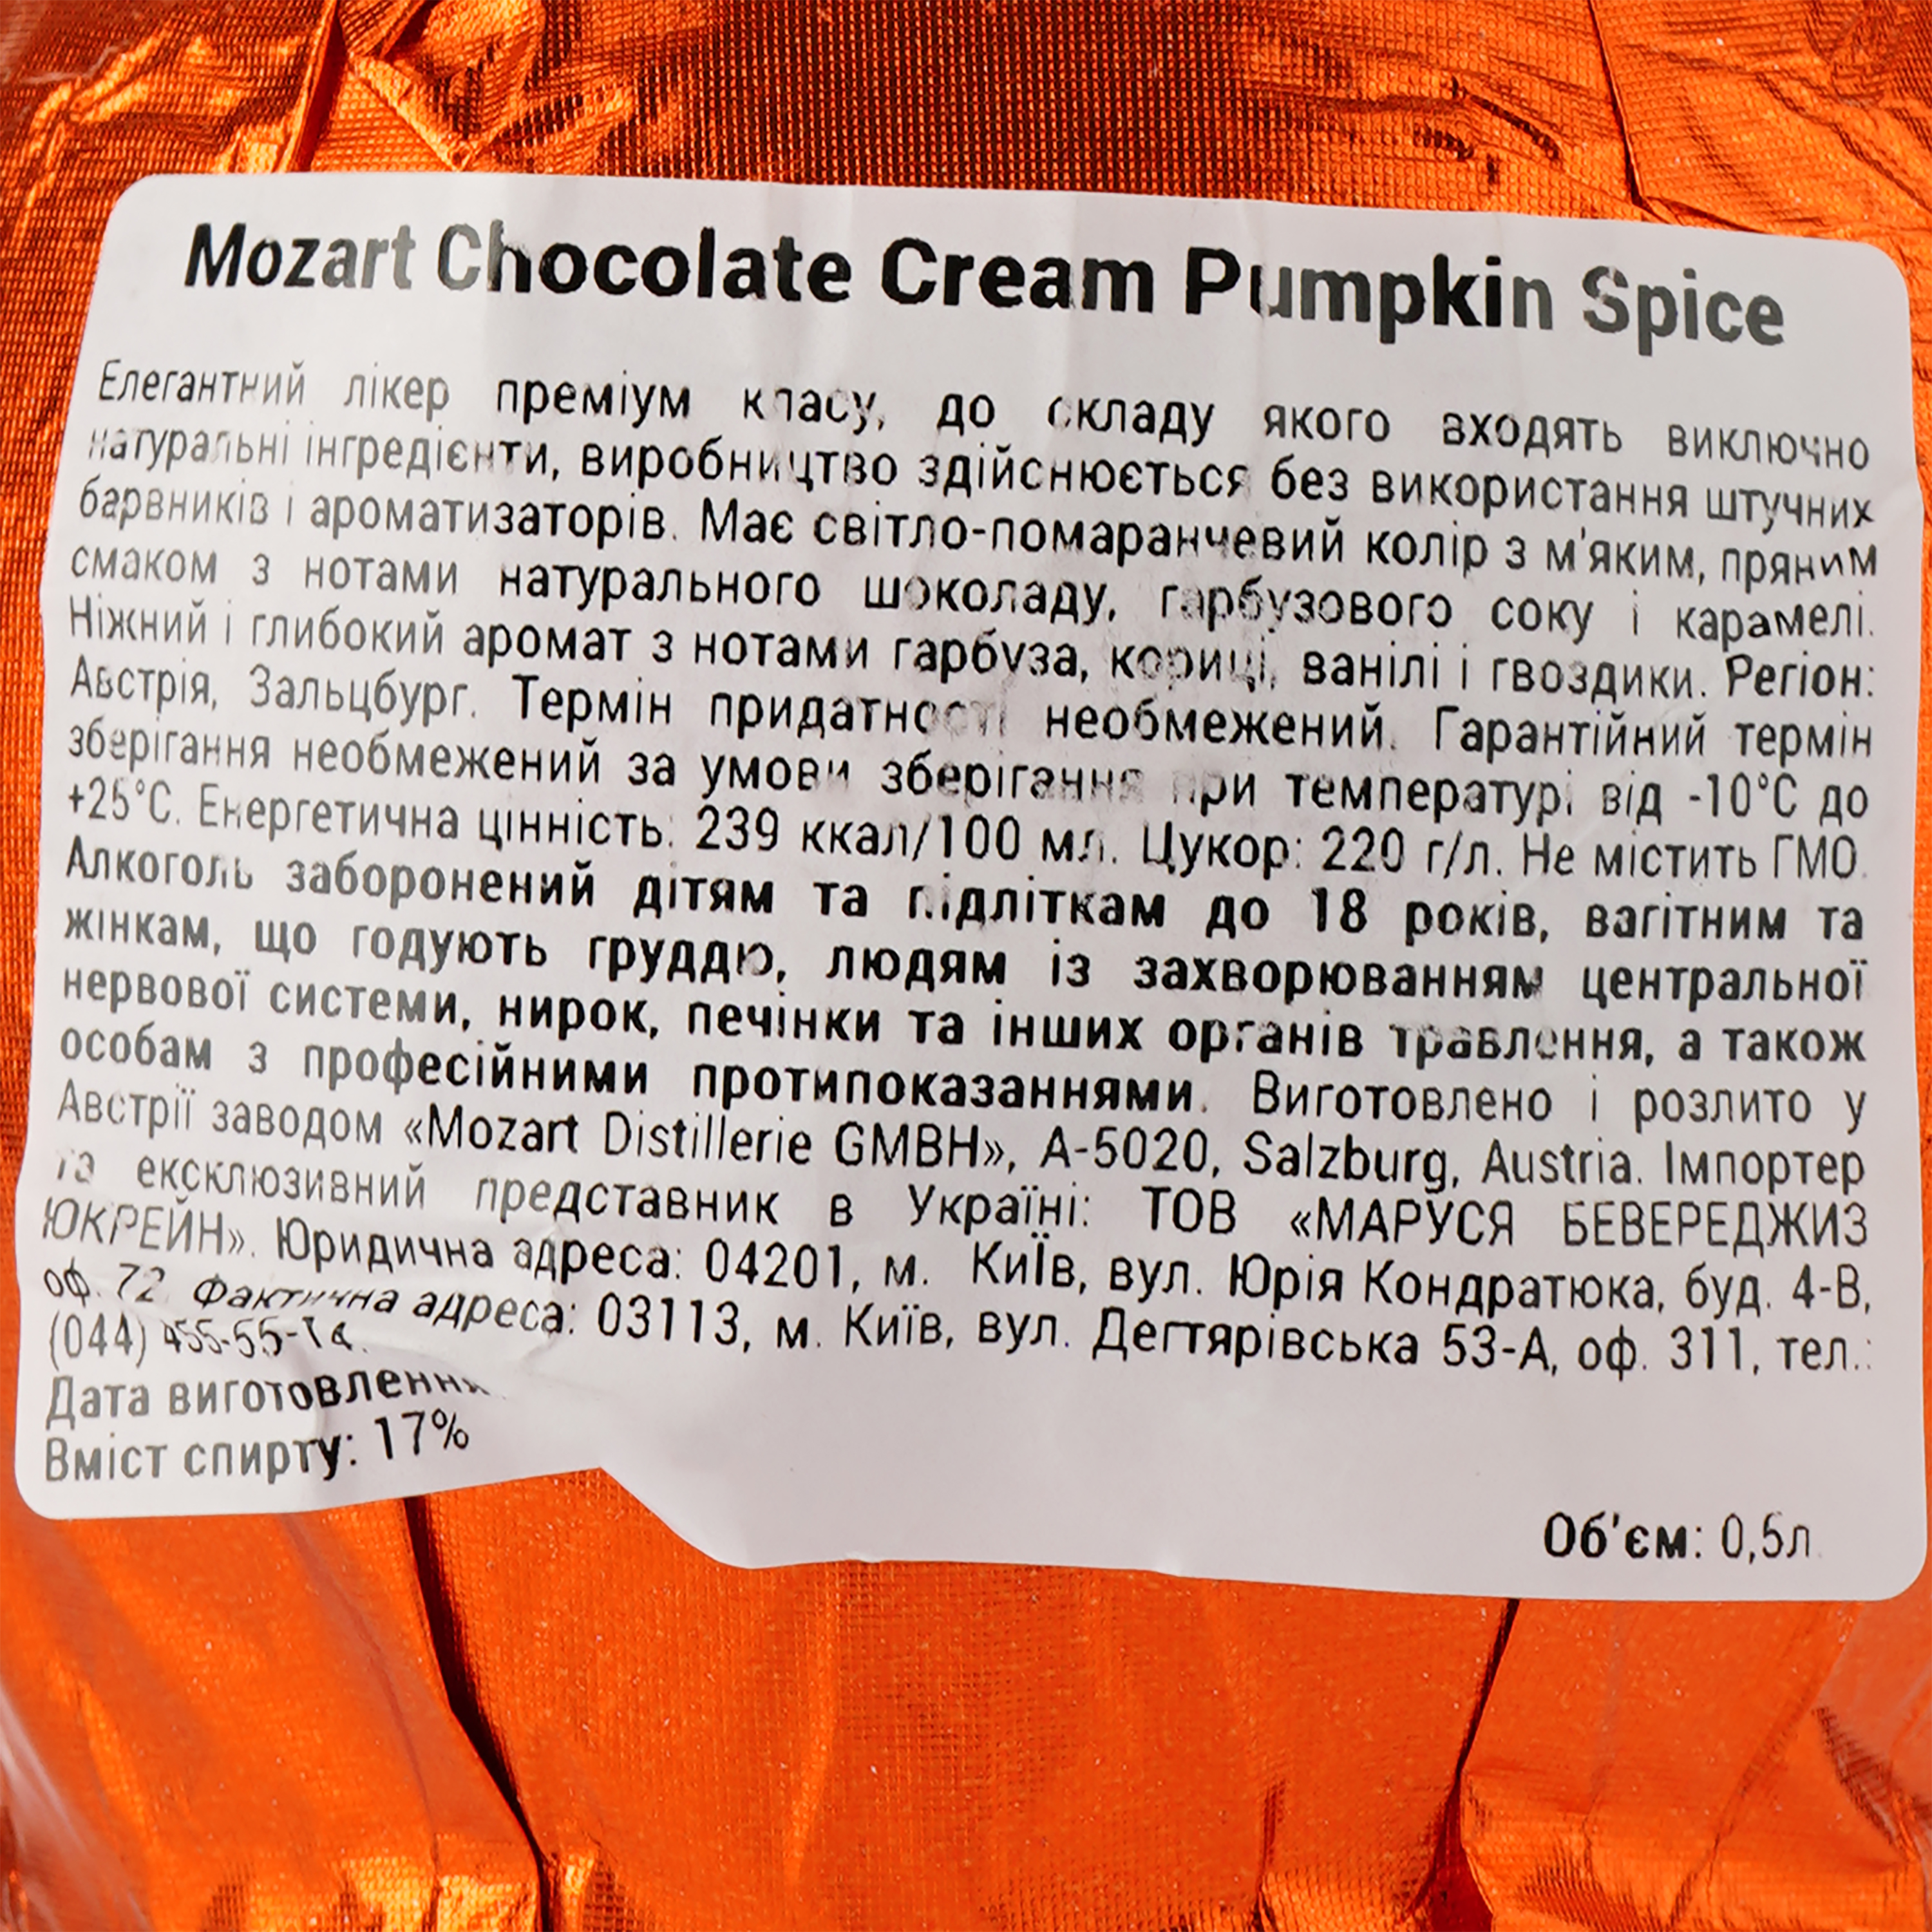 Лікер Mozart Chocolate Cream Pumpkin Spice, 17%, 0,5 л - фото 3